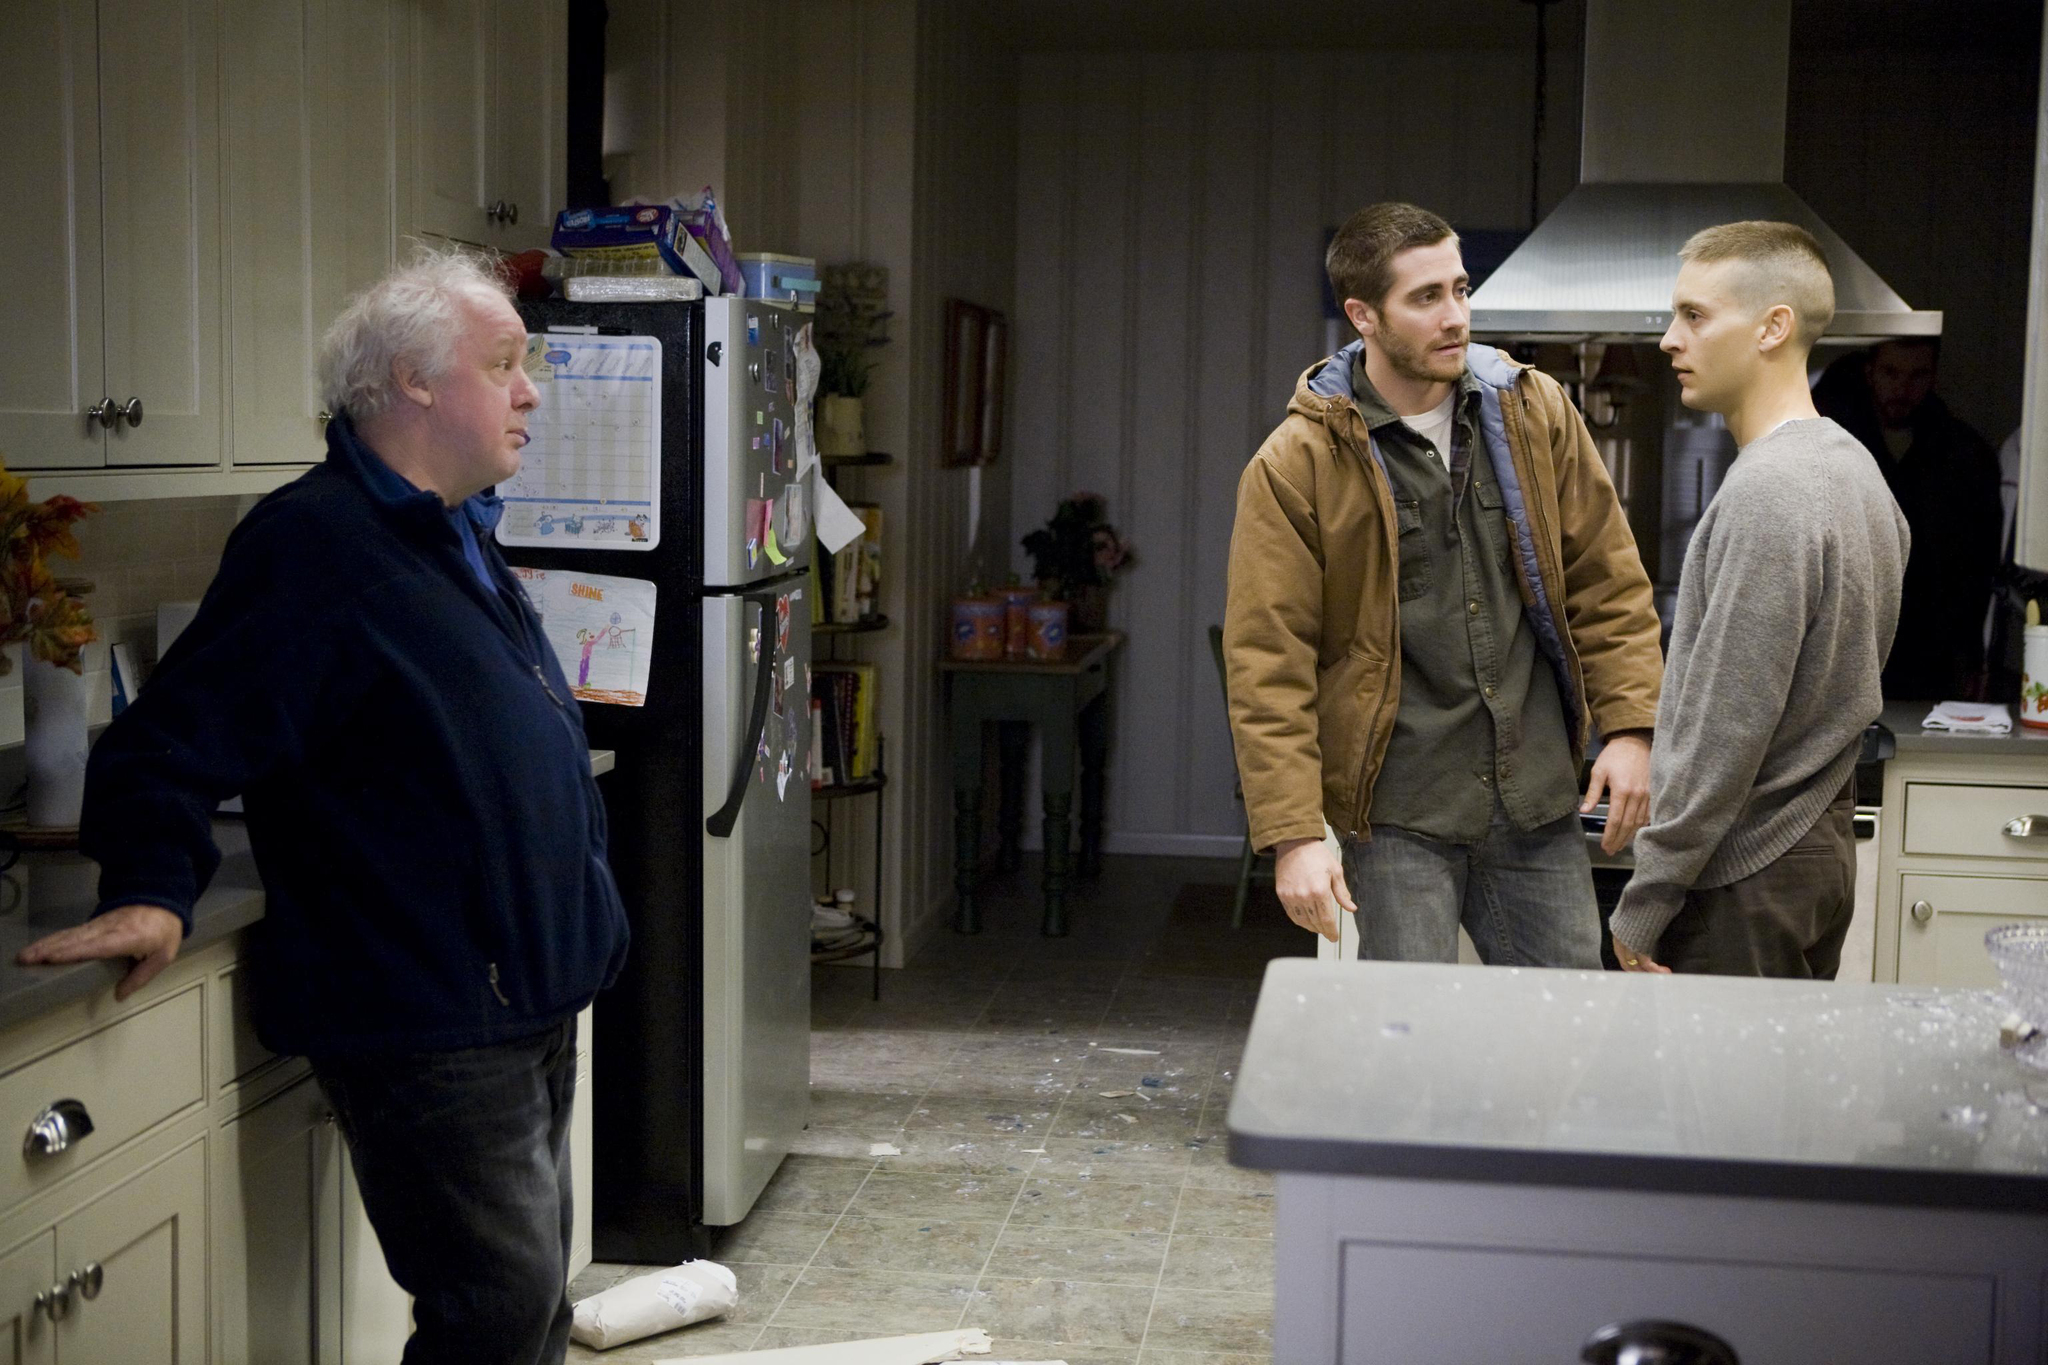 Still of Tobey Maguire, Jim Sheridan and Jake Gyllenhaal in Broliai (2009)